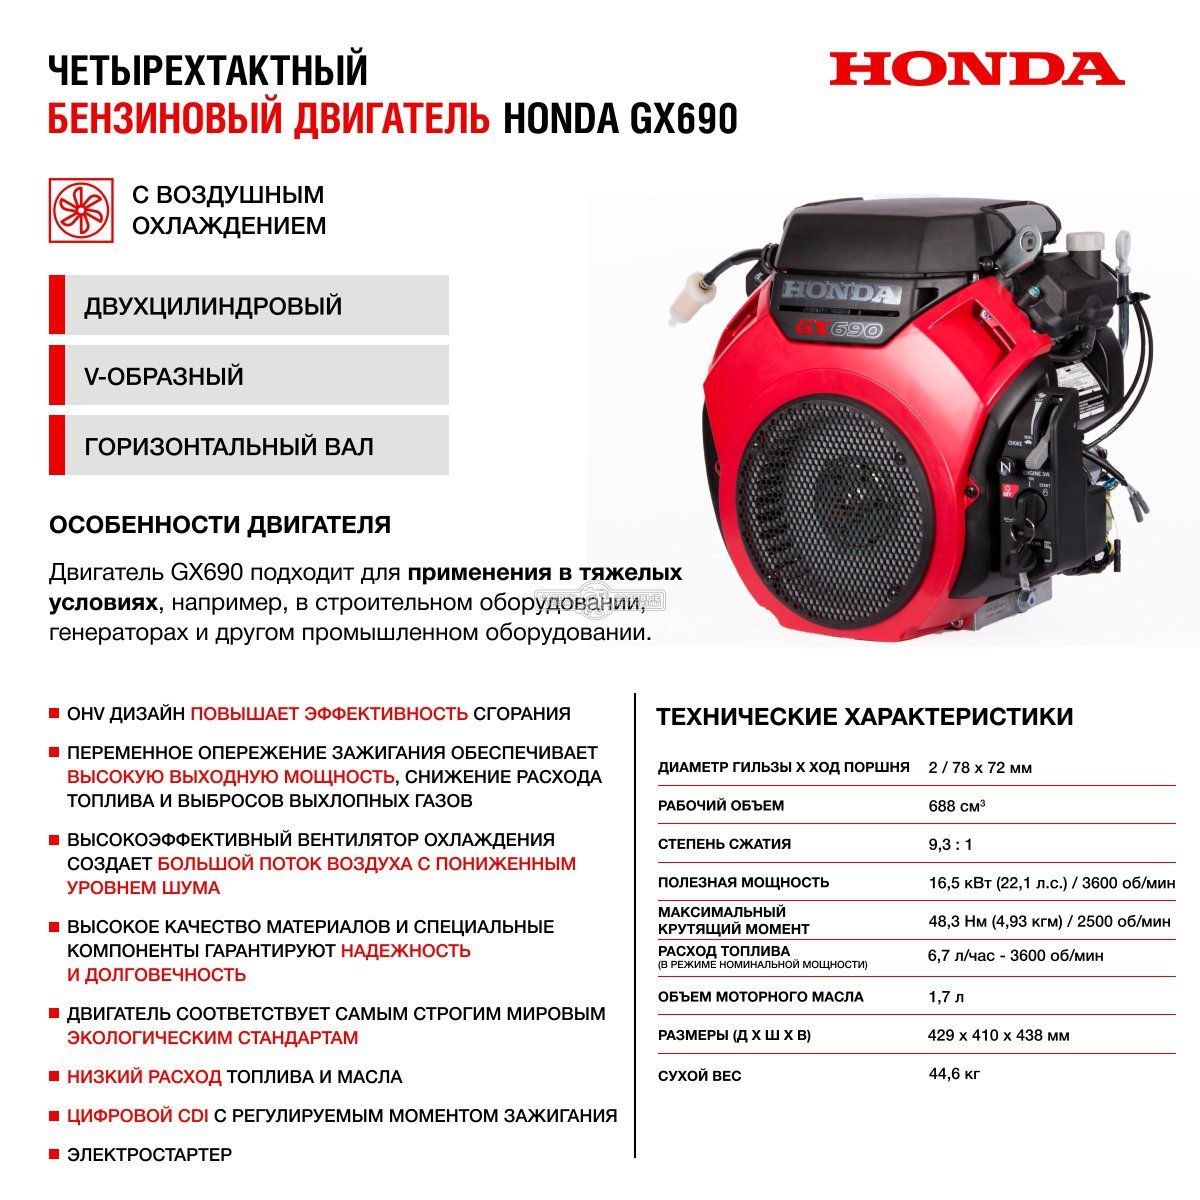 Бензиновый генератор HND GE12000XLS (PRC, Honda GX690, 11.0/12.0 кВт, электростартер, 40 л, 160 кг)